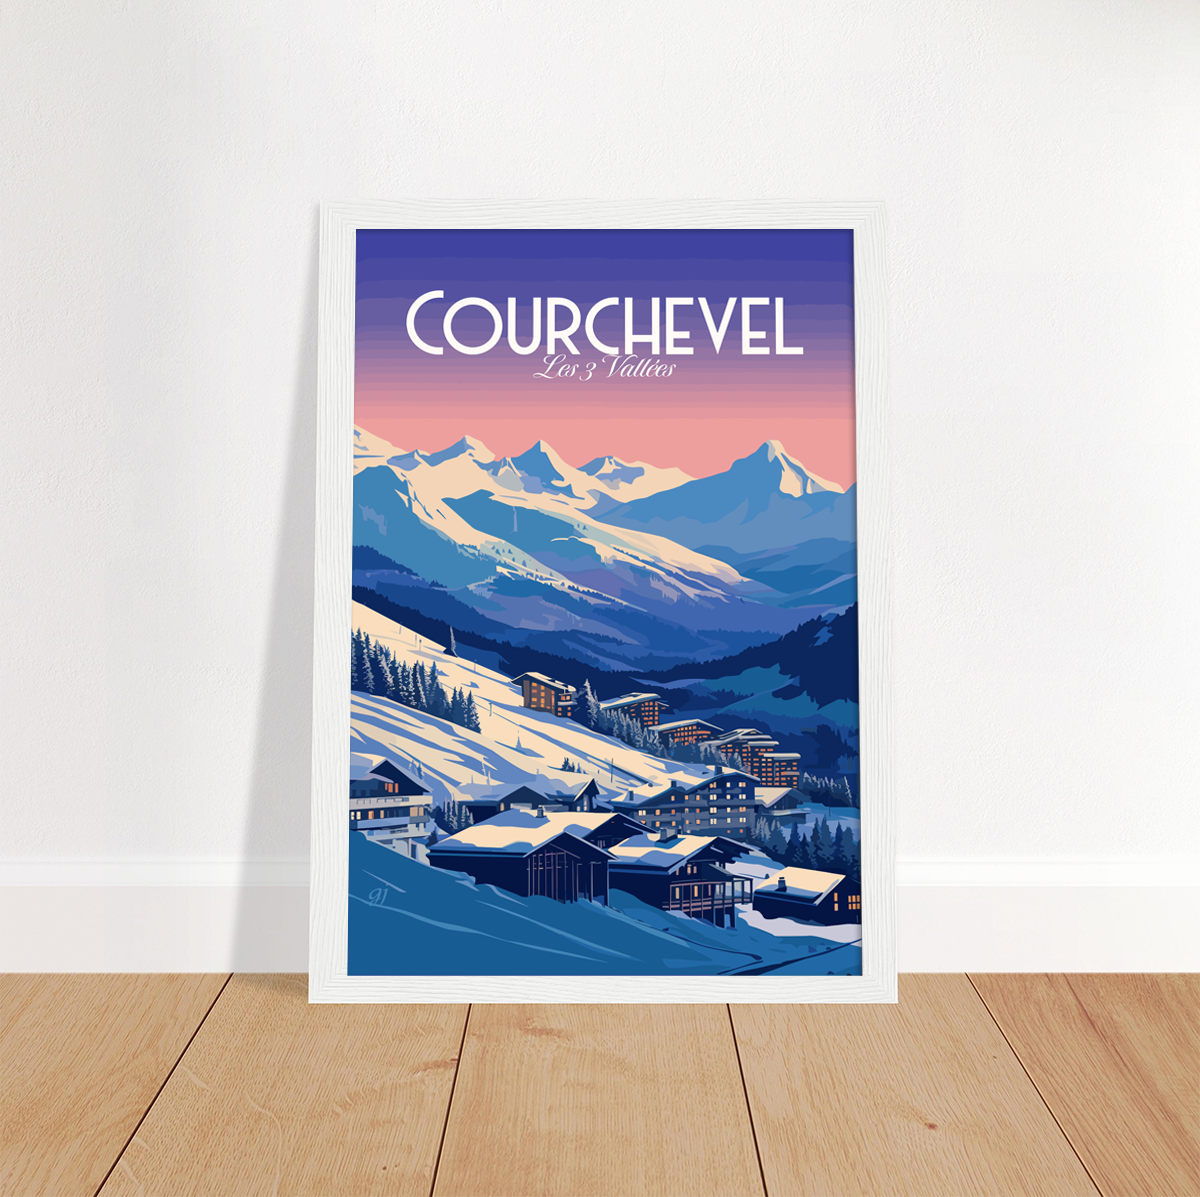 Courchevel poster by bon voyage design